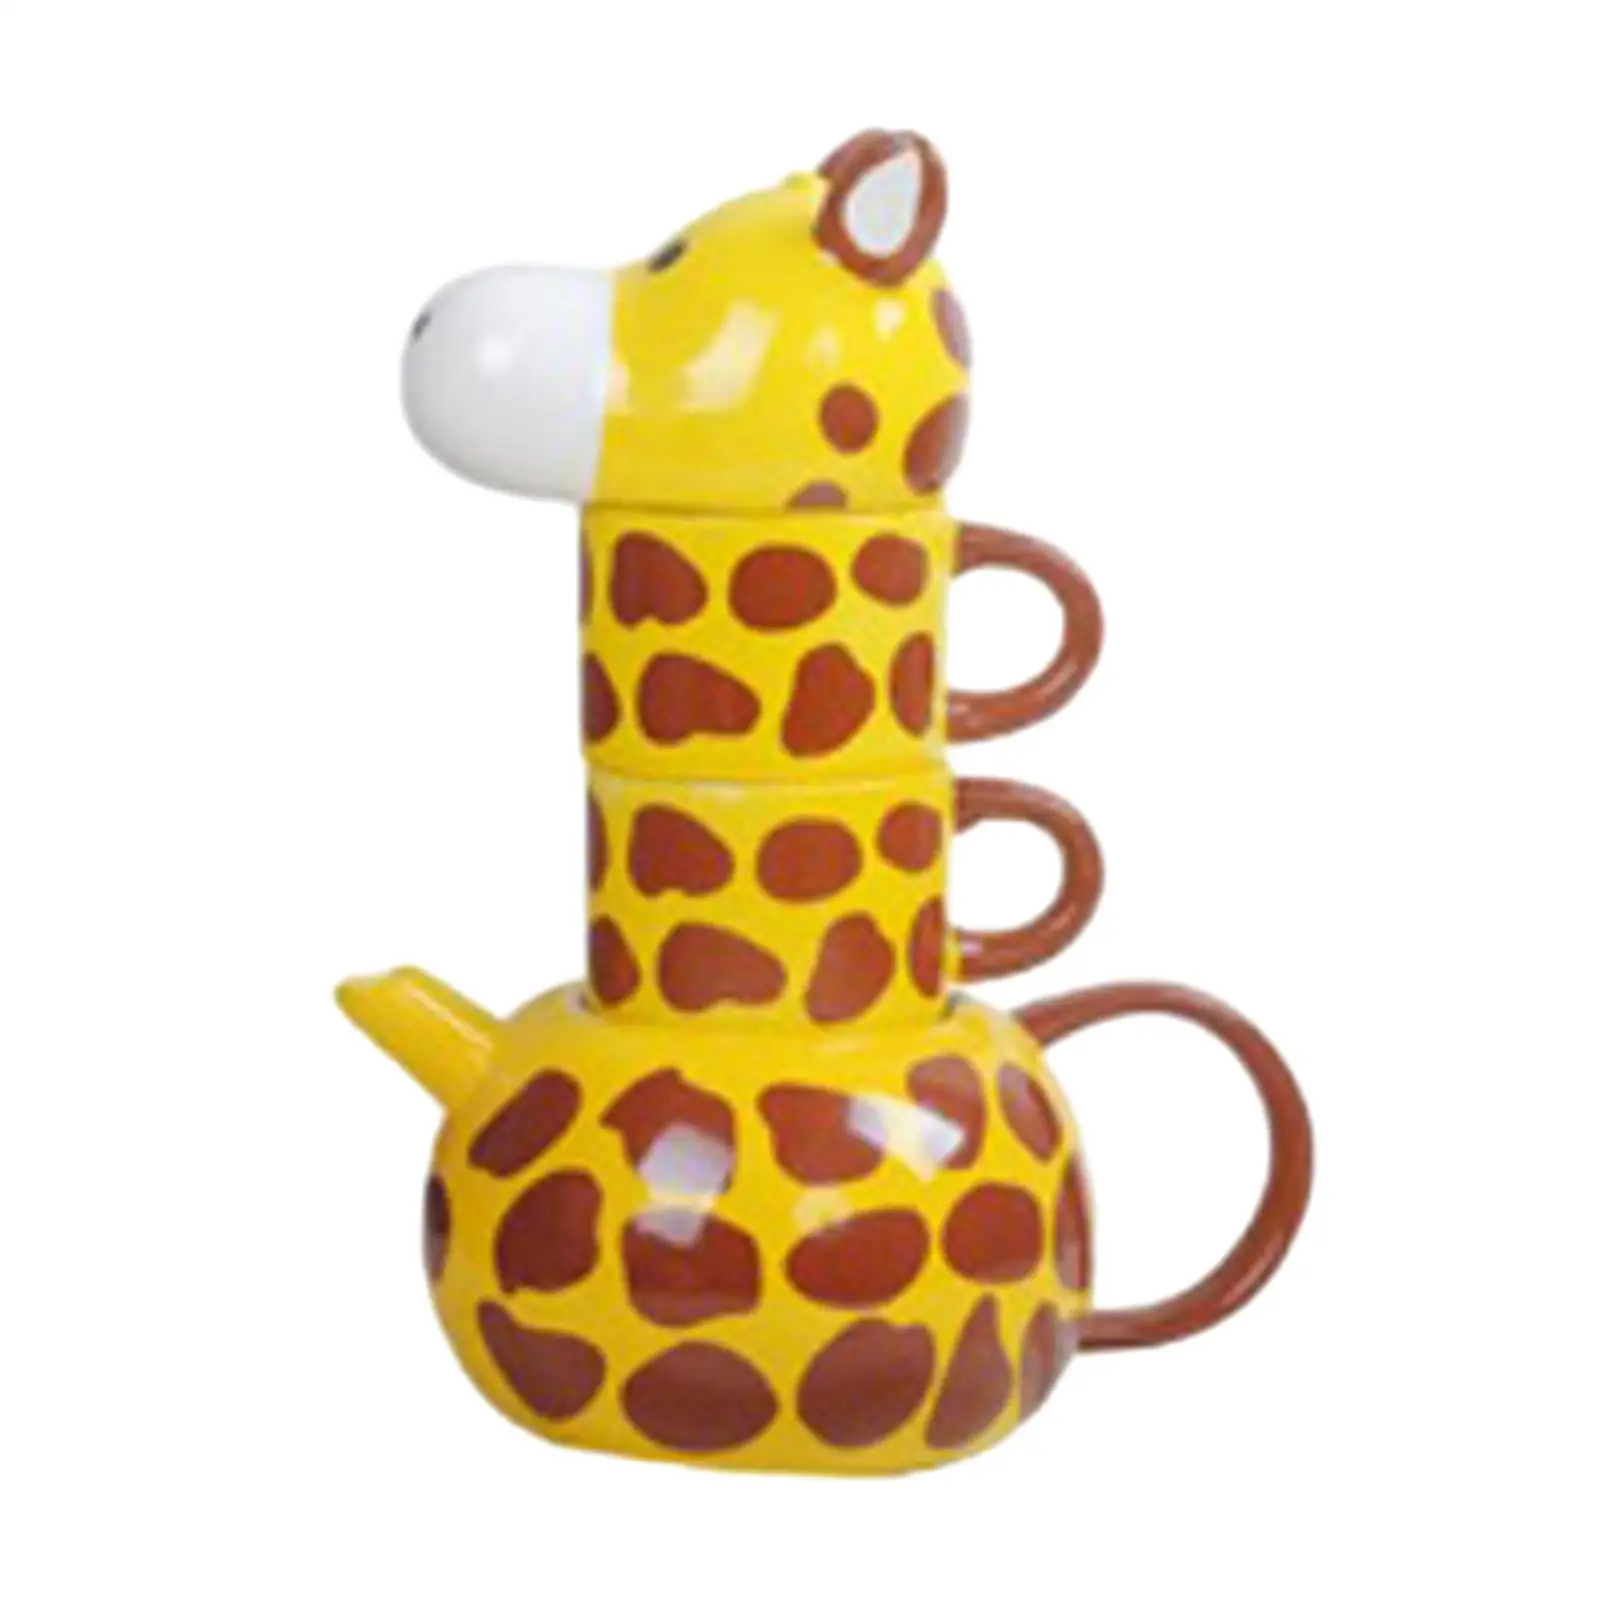 Cute Giraffe Ceramics Teapot Set Tea Mugs Milk Mug Kids Gifts Tea Set Porcelain for Adults Teacups for Office Home Desk Travel